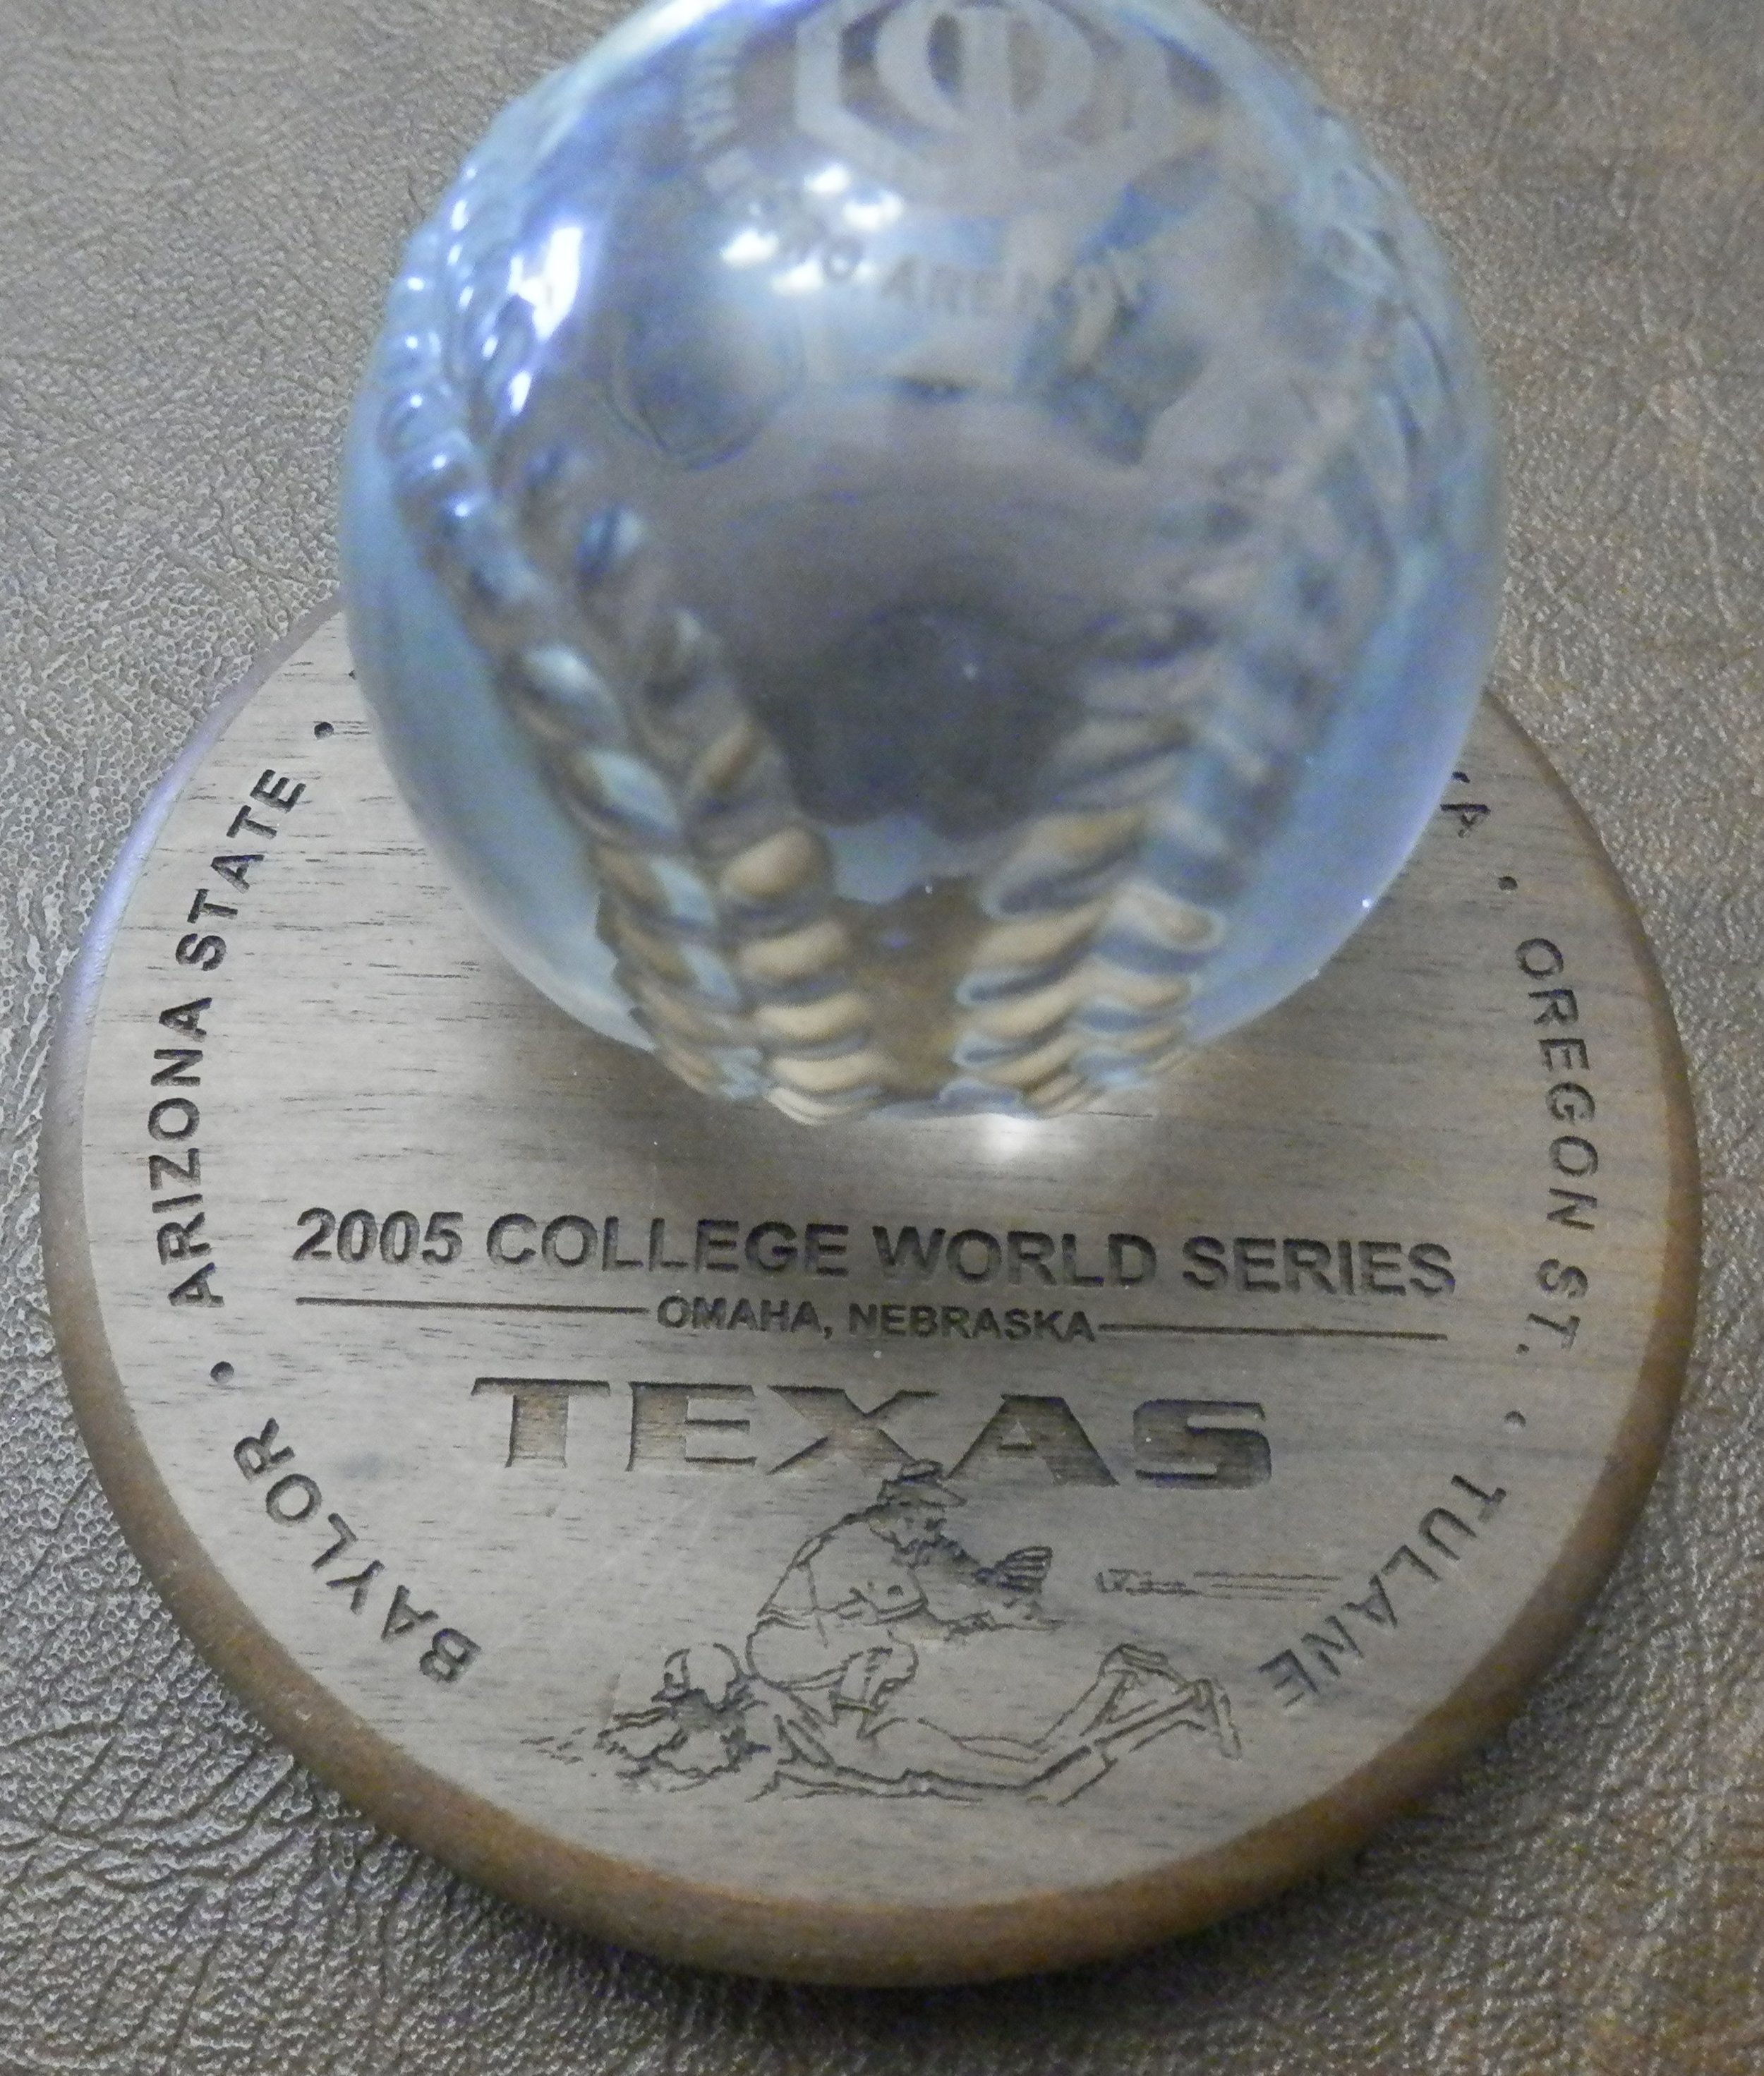 2005 CWS baseball memoribilianes.JPG